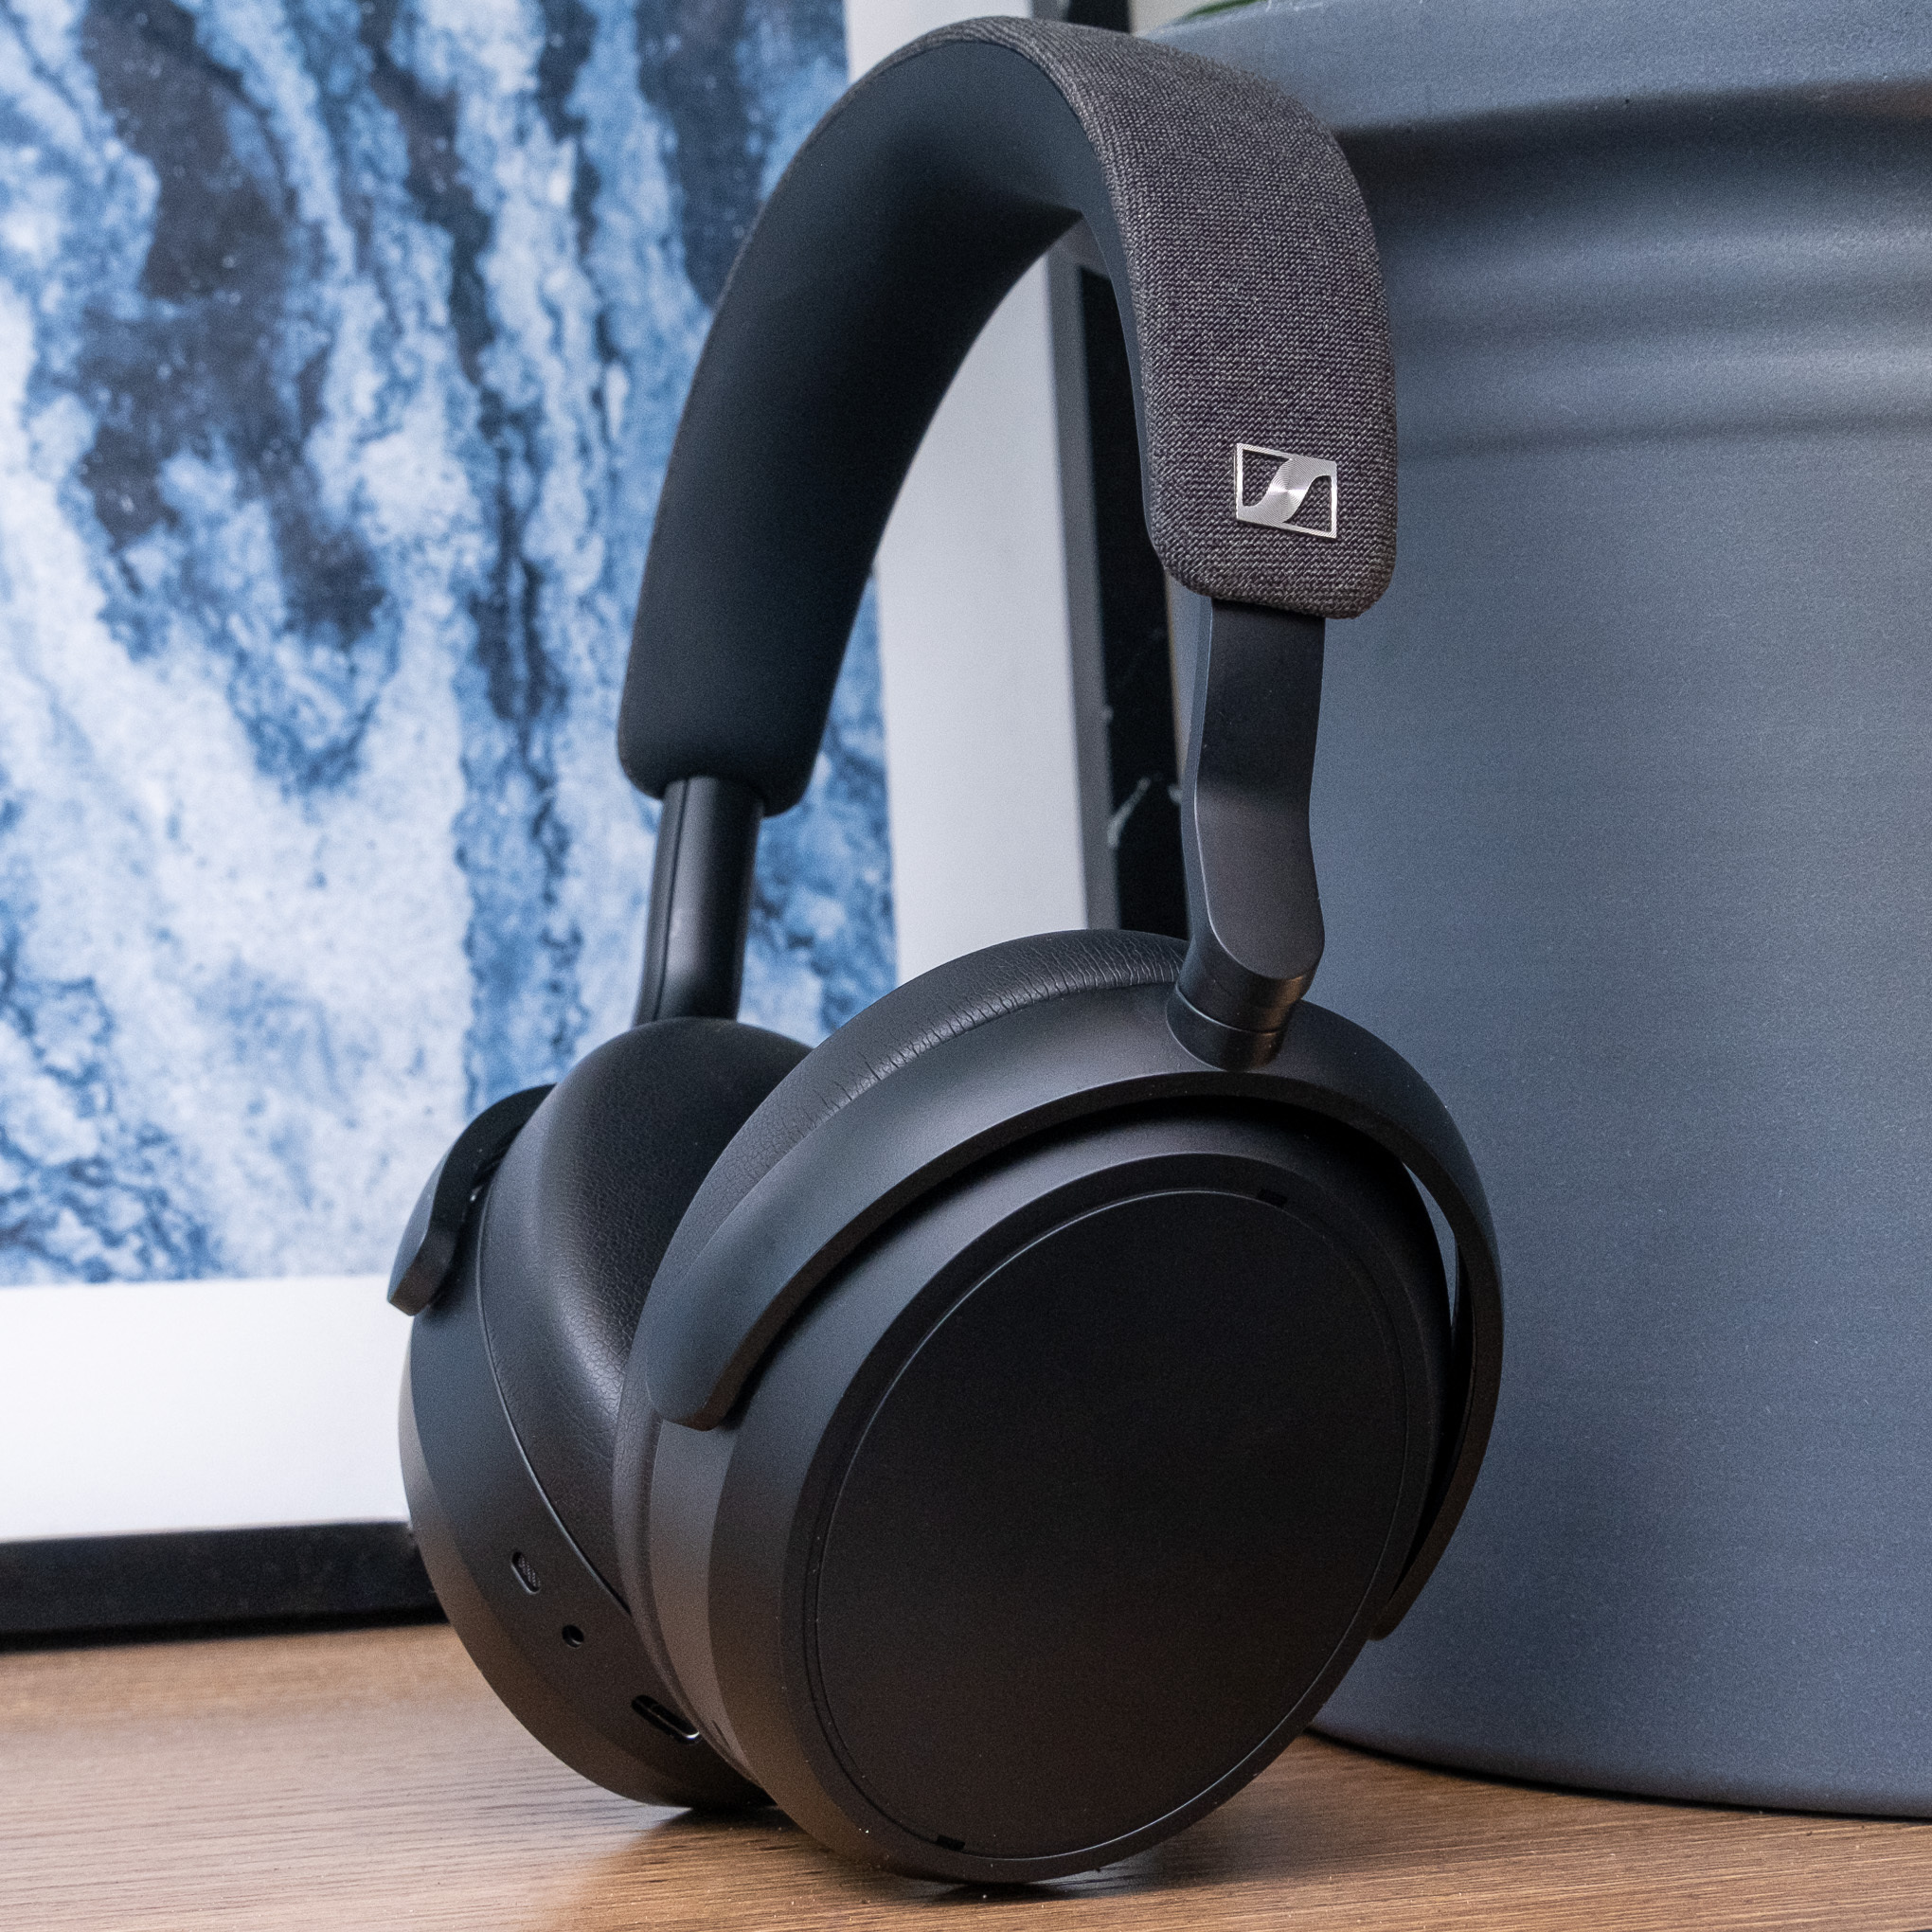 Sennheiser Momentum 4 headphones review: less cool, more